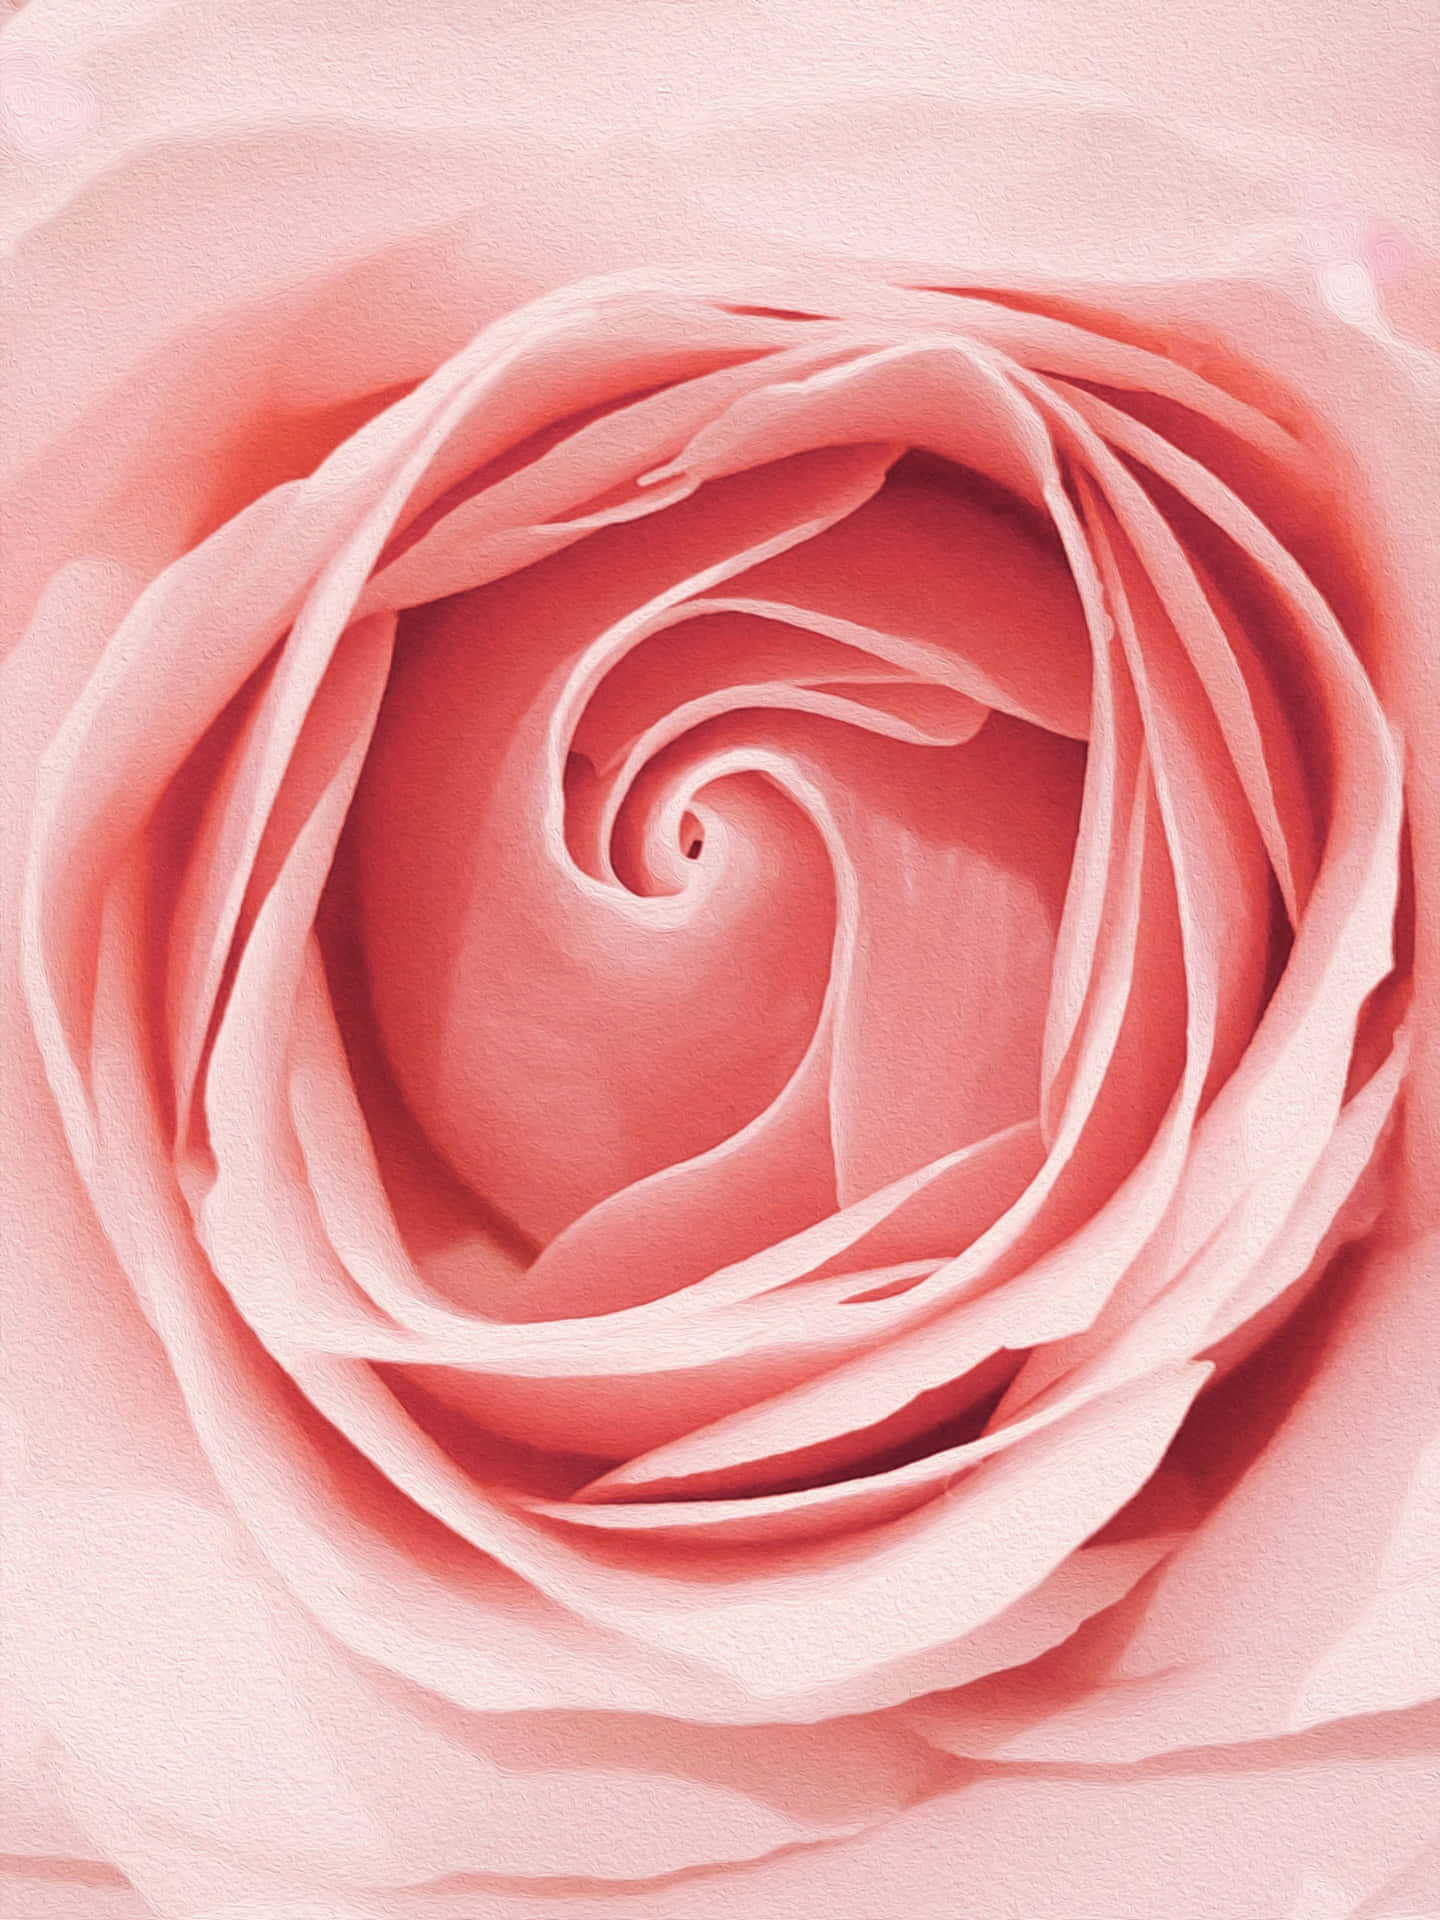 Rose Gold Pastel Rose Closeup Wallpaper